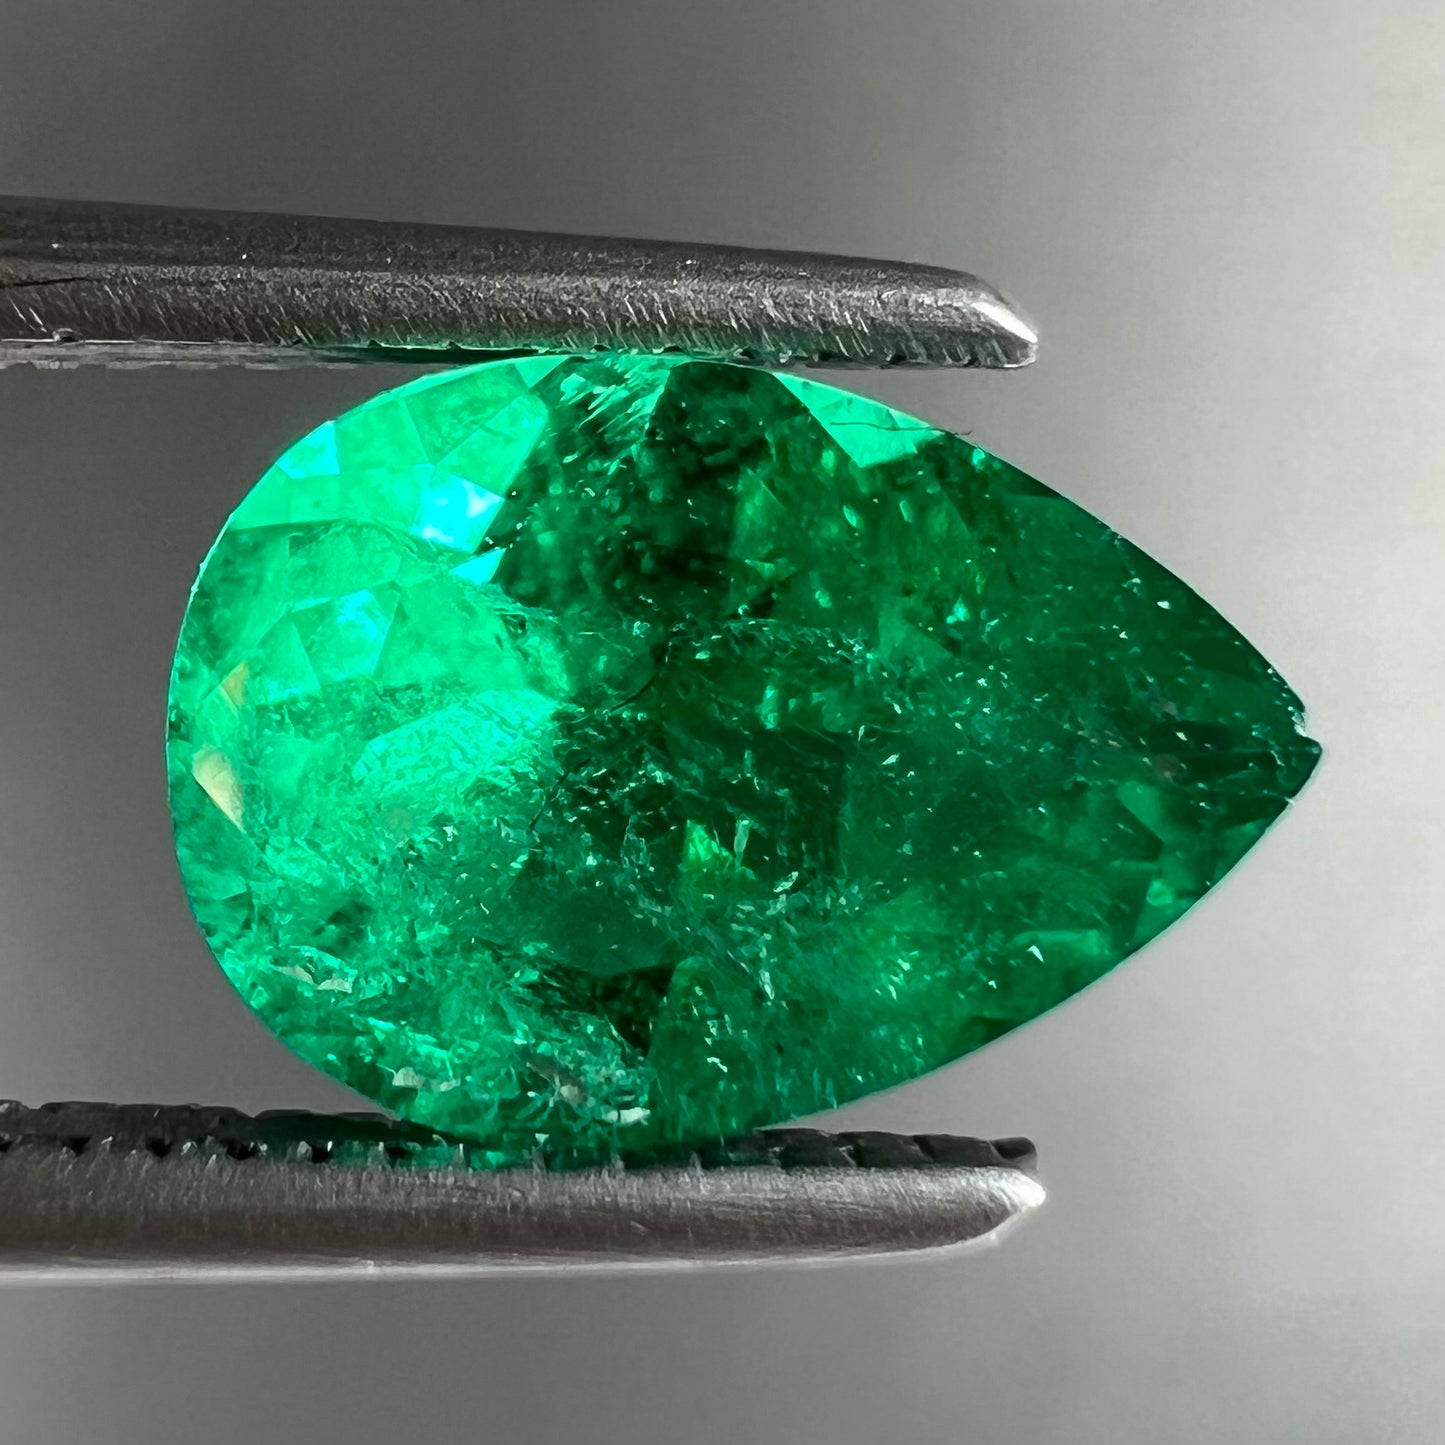 A loose, pear shaped natural emerald gemstone.